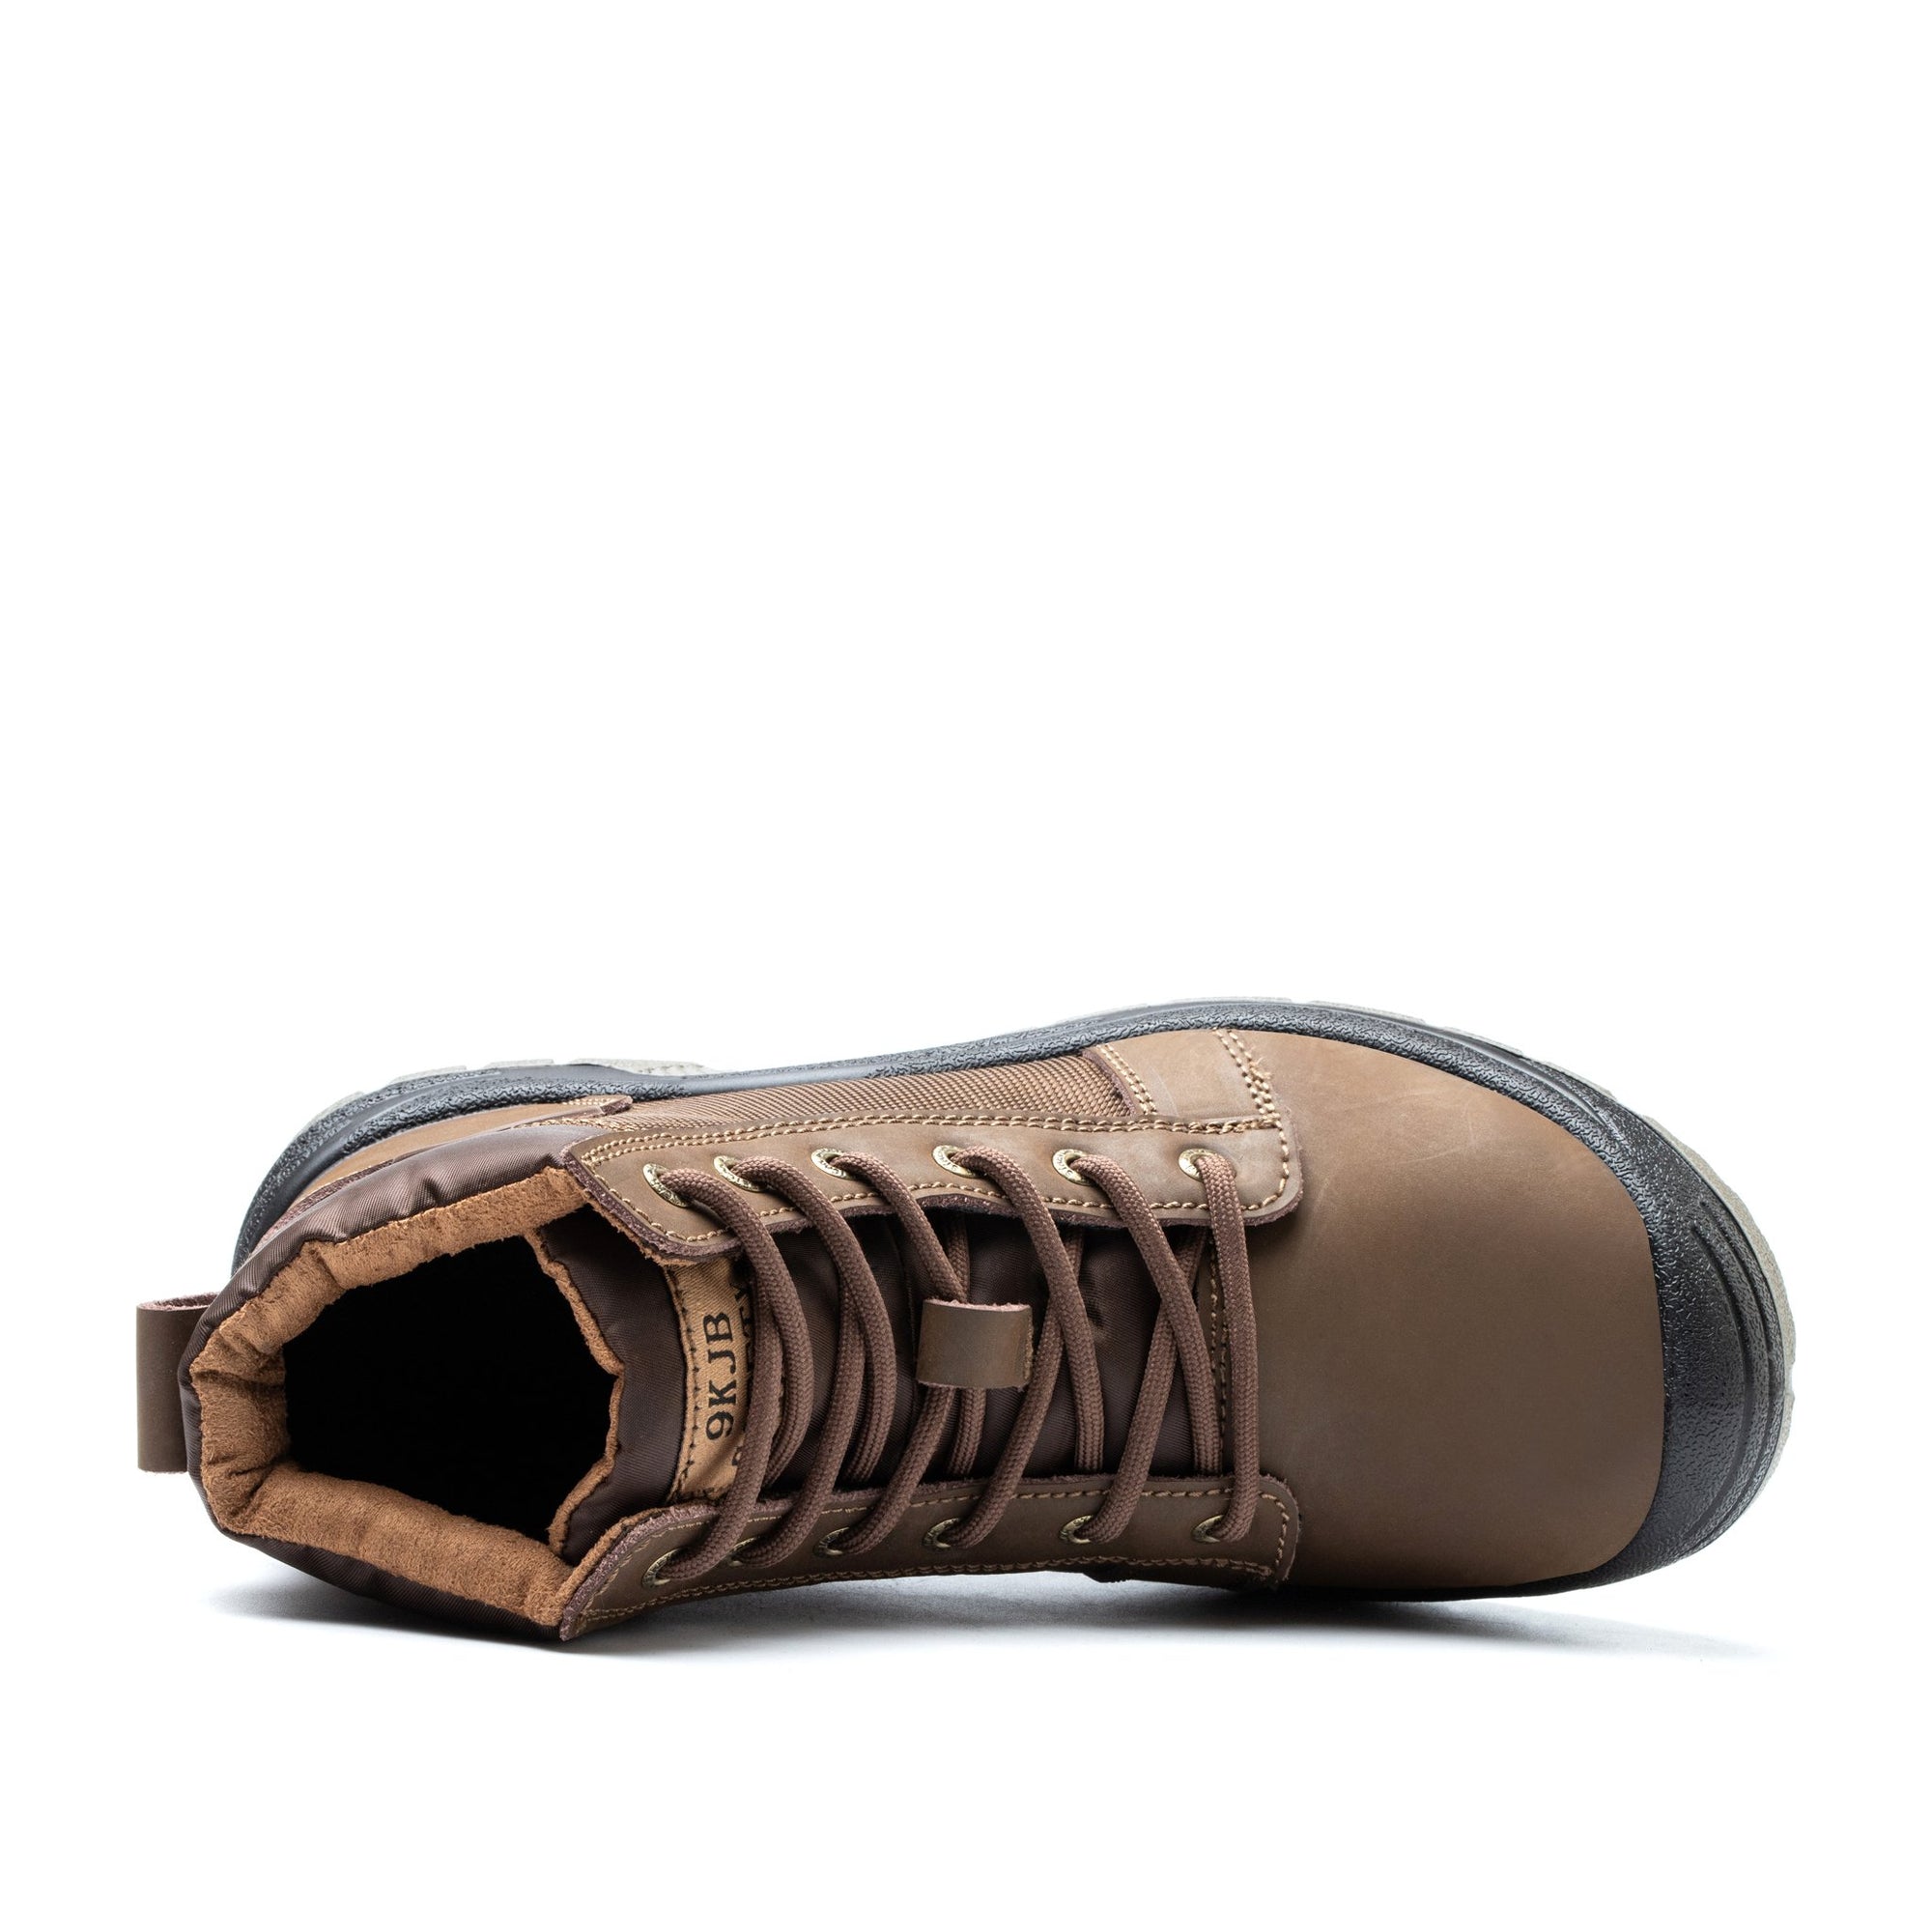 9K Brown - Indestructible Shoes